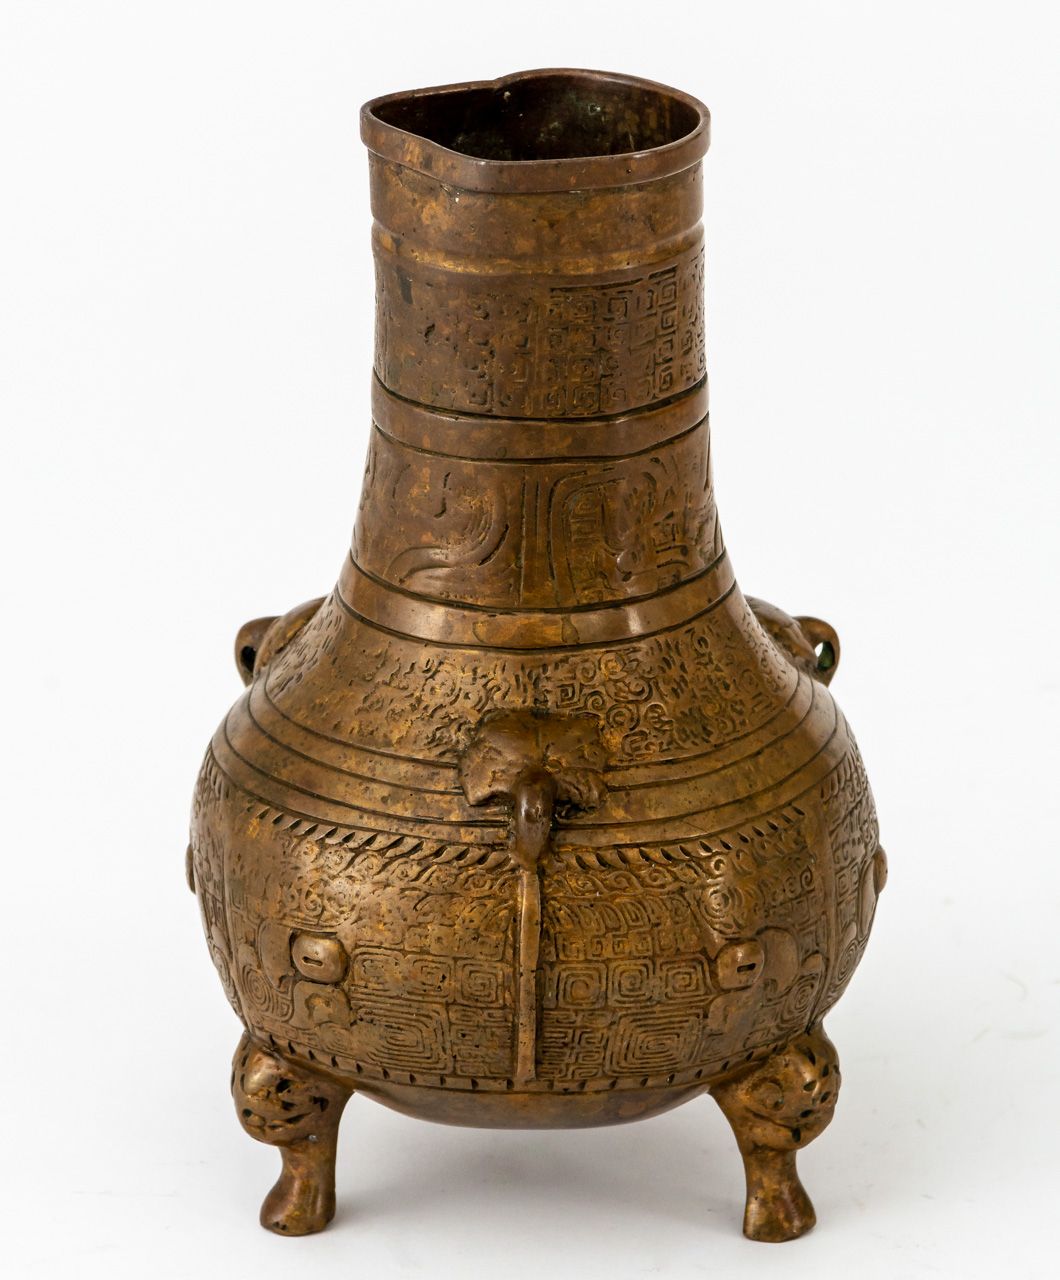 DREI-FUSS-VASE China, Bronze, 19. Jh. Oder älter

16,5 cm hoch